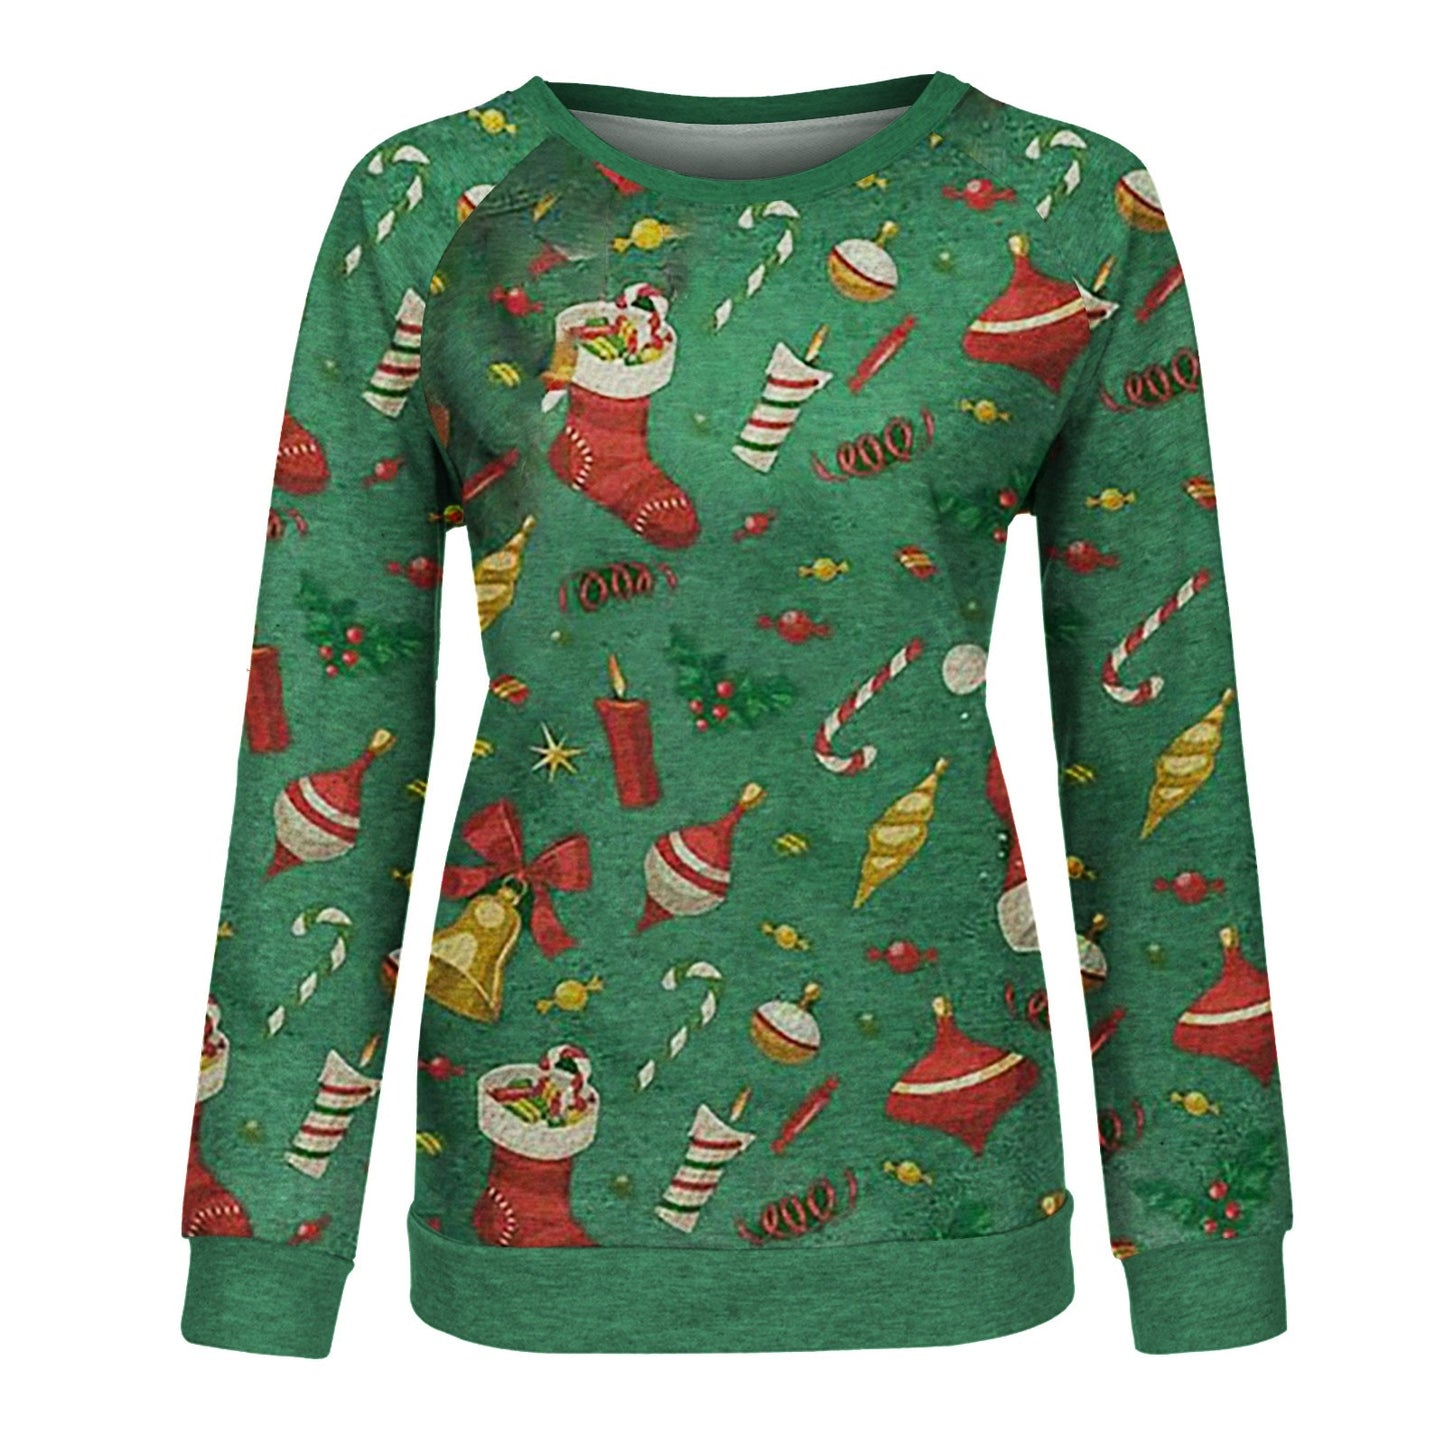 New Fashion Pullover Top Print Snowman Sweaters, Christmas Sweatshirt, Winter Warm Sweatshirt Long Sleeve S-3xl Women